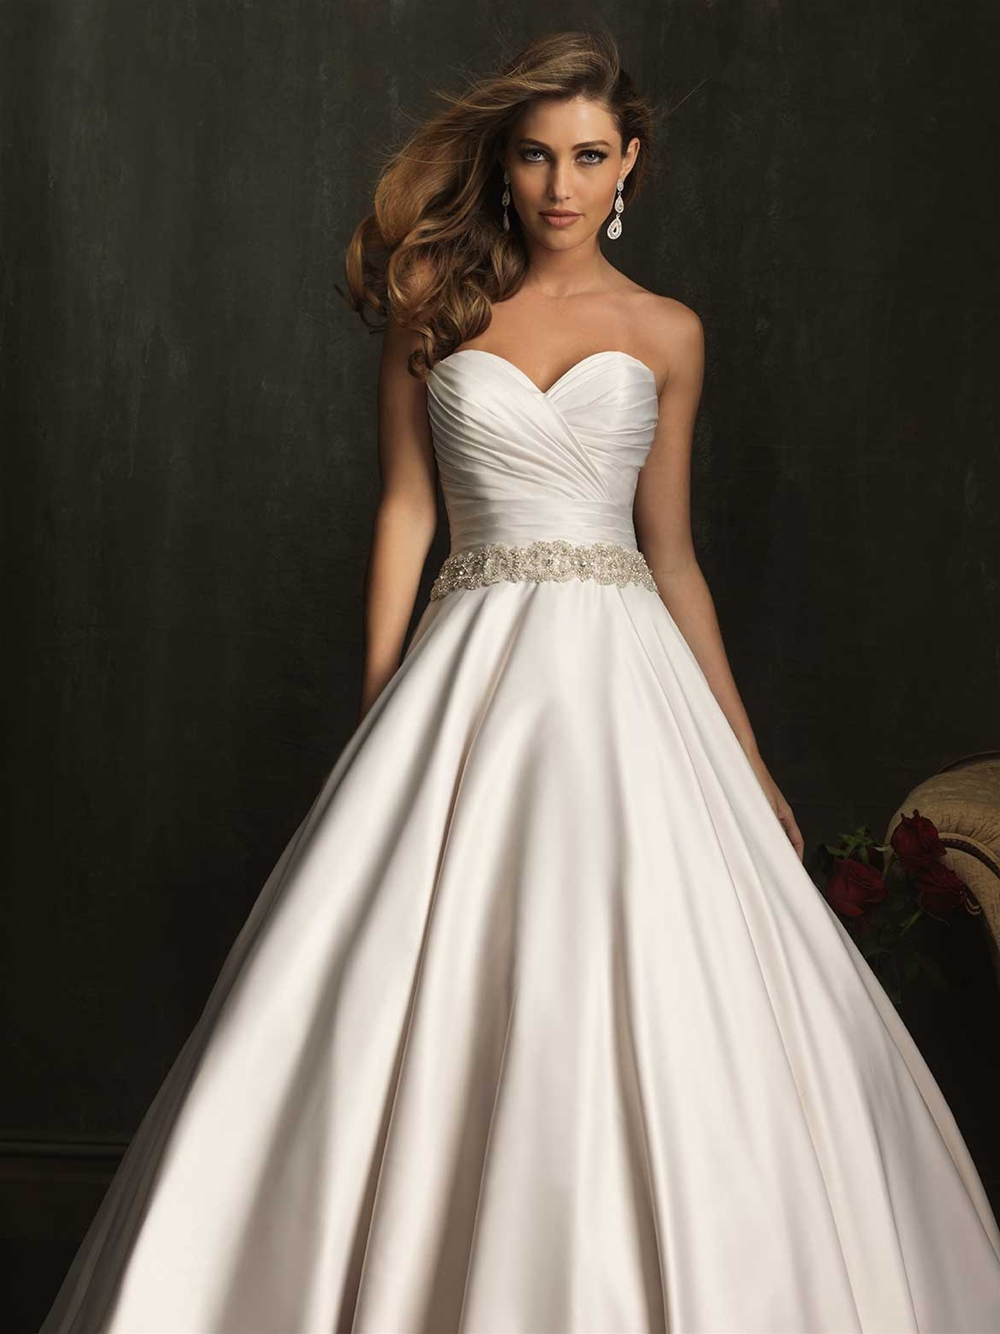 Model wearing a white dress 14